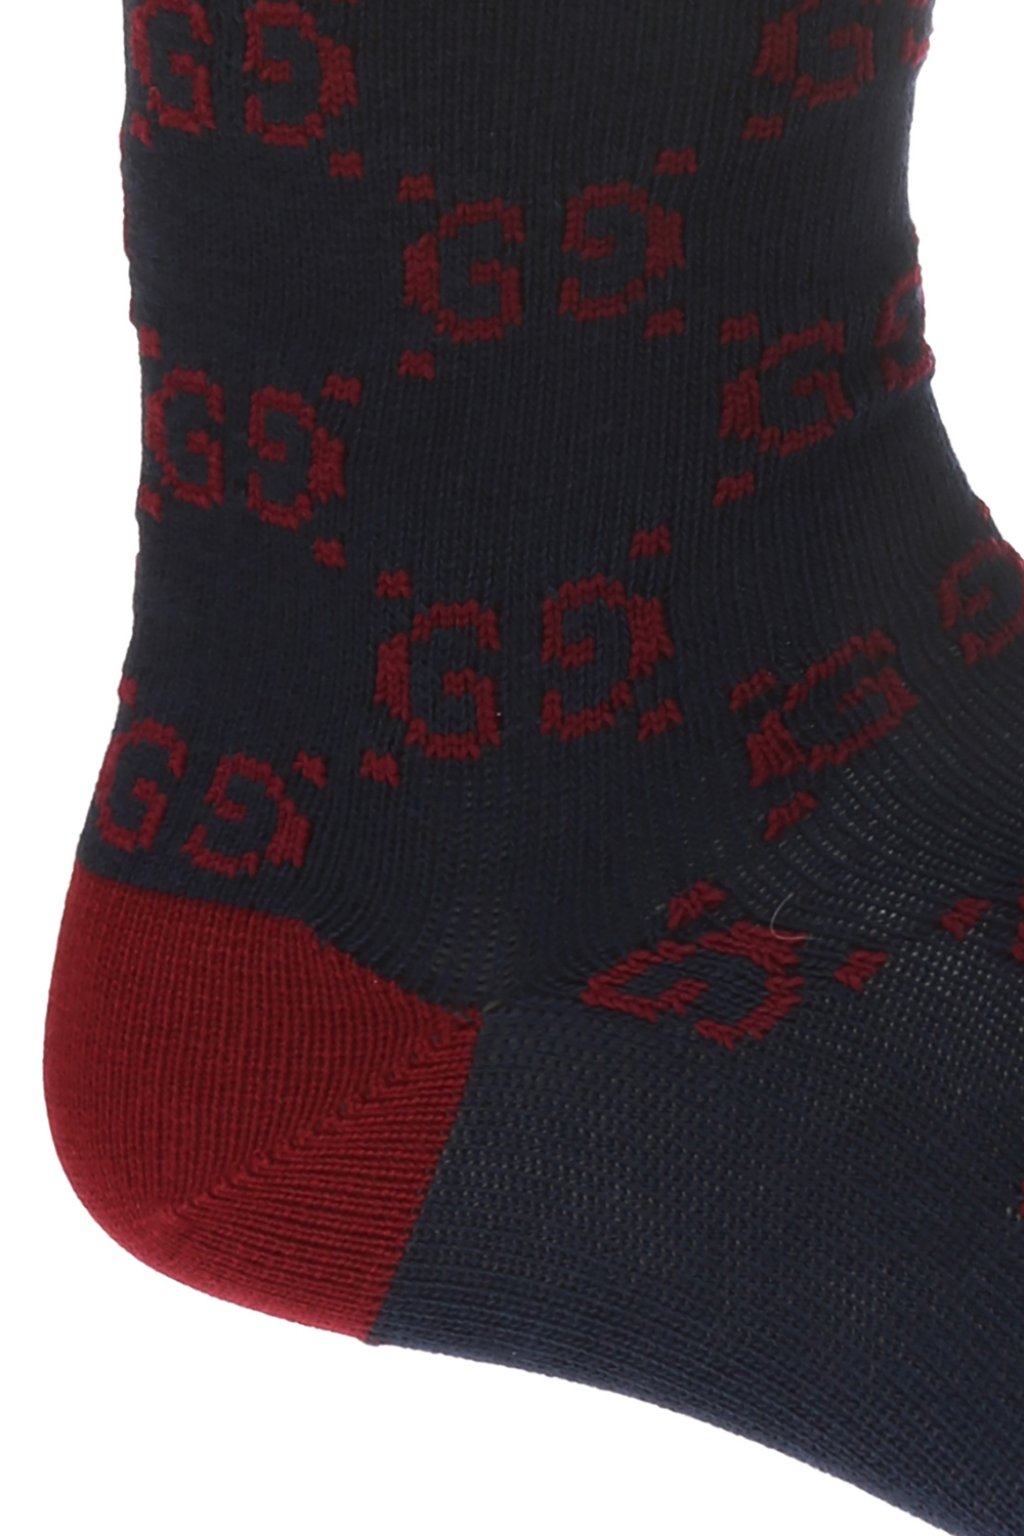 Gucci Patterned socks